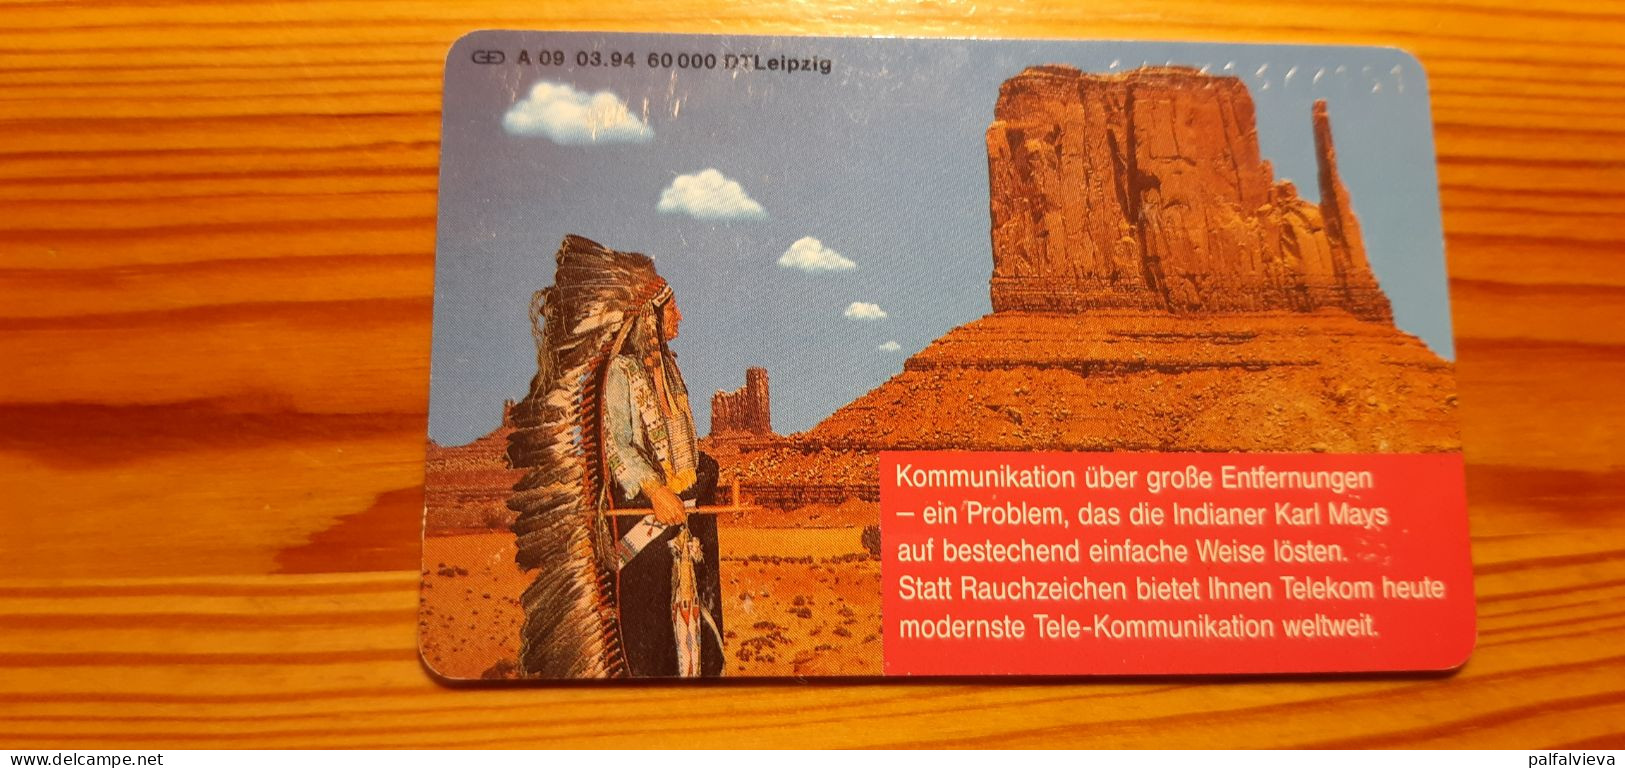 Phonecard Germany A 09 03.94. Karl May, Native American, USA 60.000 Ex. - A + AD-Series : Publicitarias De Telekom AG Alemania